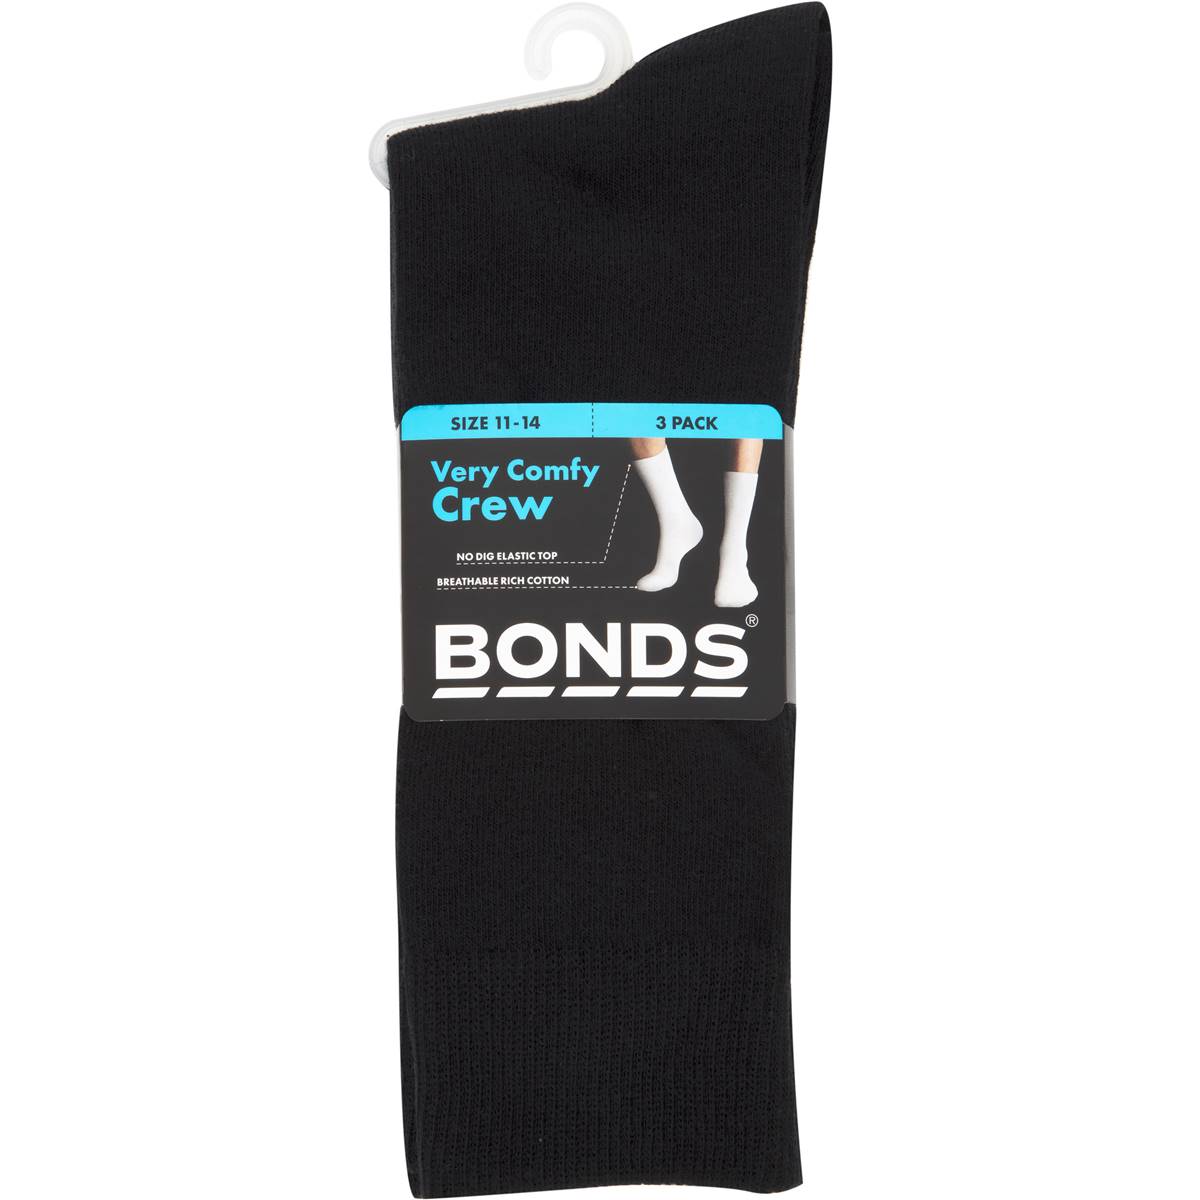 Bonds Men's Very Comfy Crew Socks 3 Pack - Black